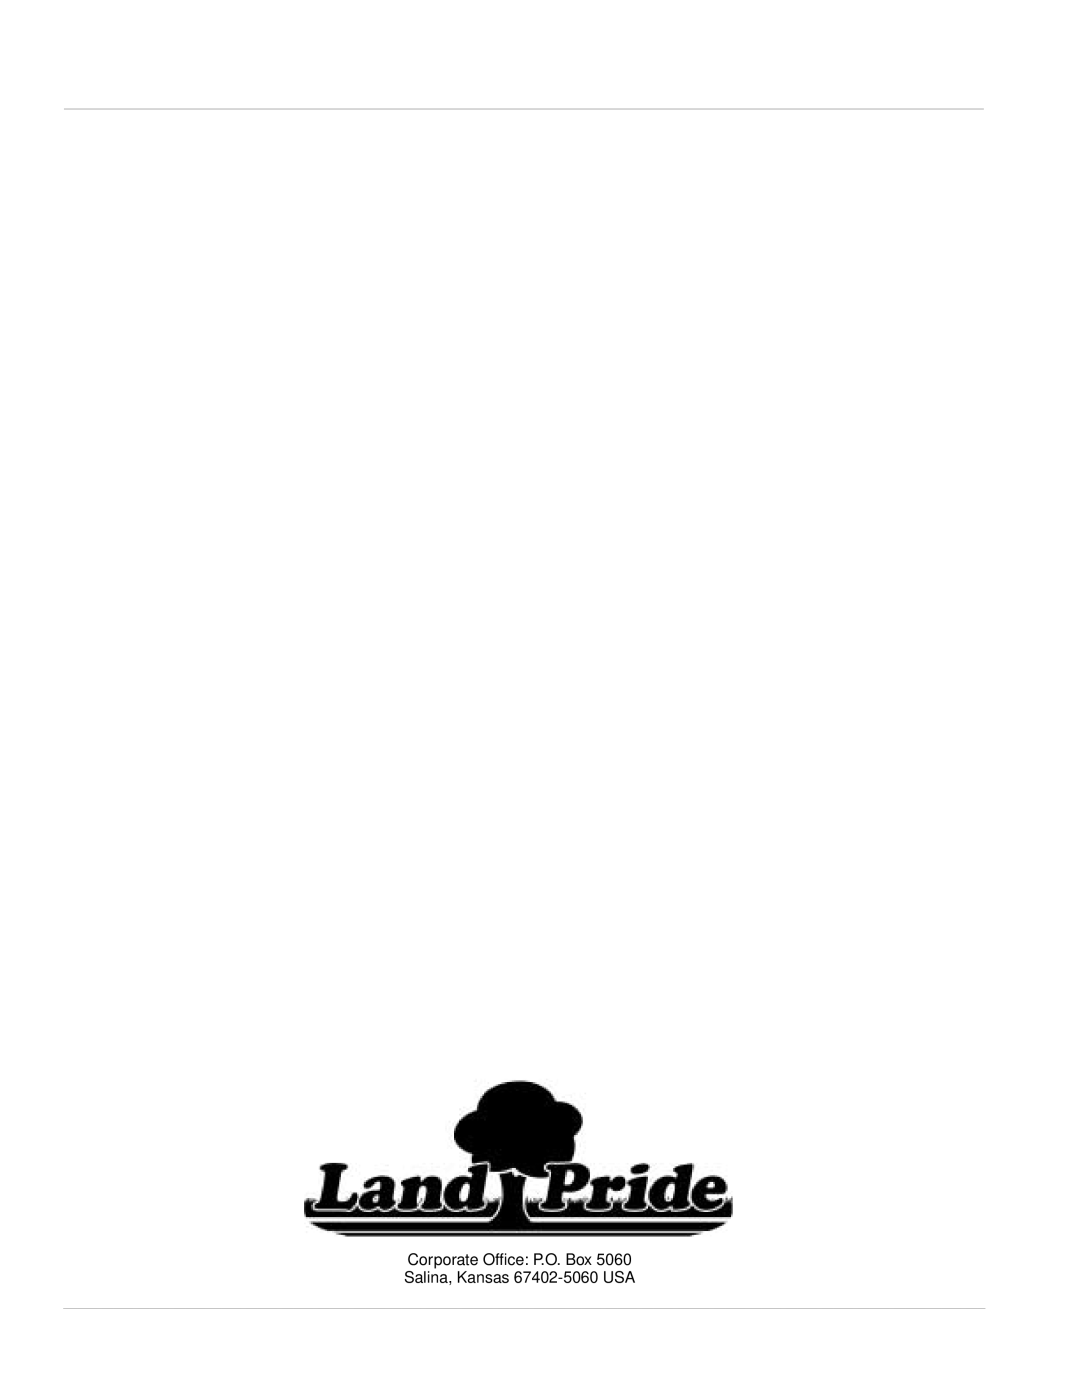 Land Pride FDR15 manual Corporate Ofﬁce P.O. Box 5060 Salina, Kansas 67402-5060 USA 